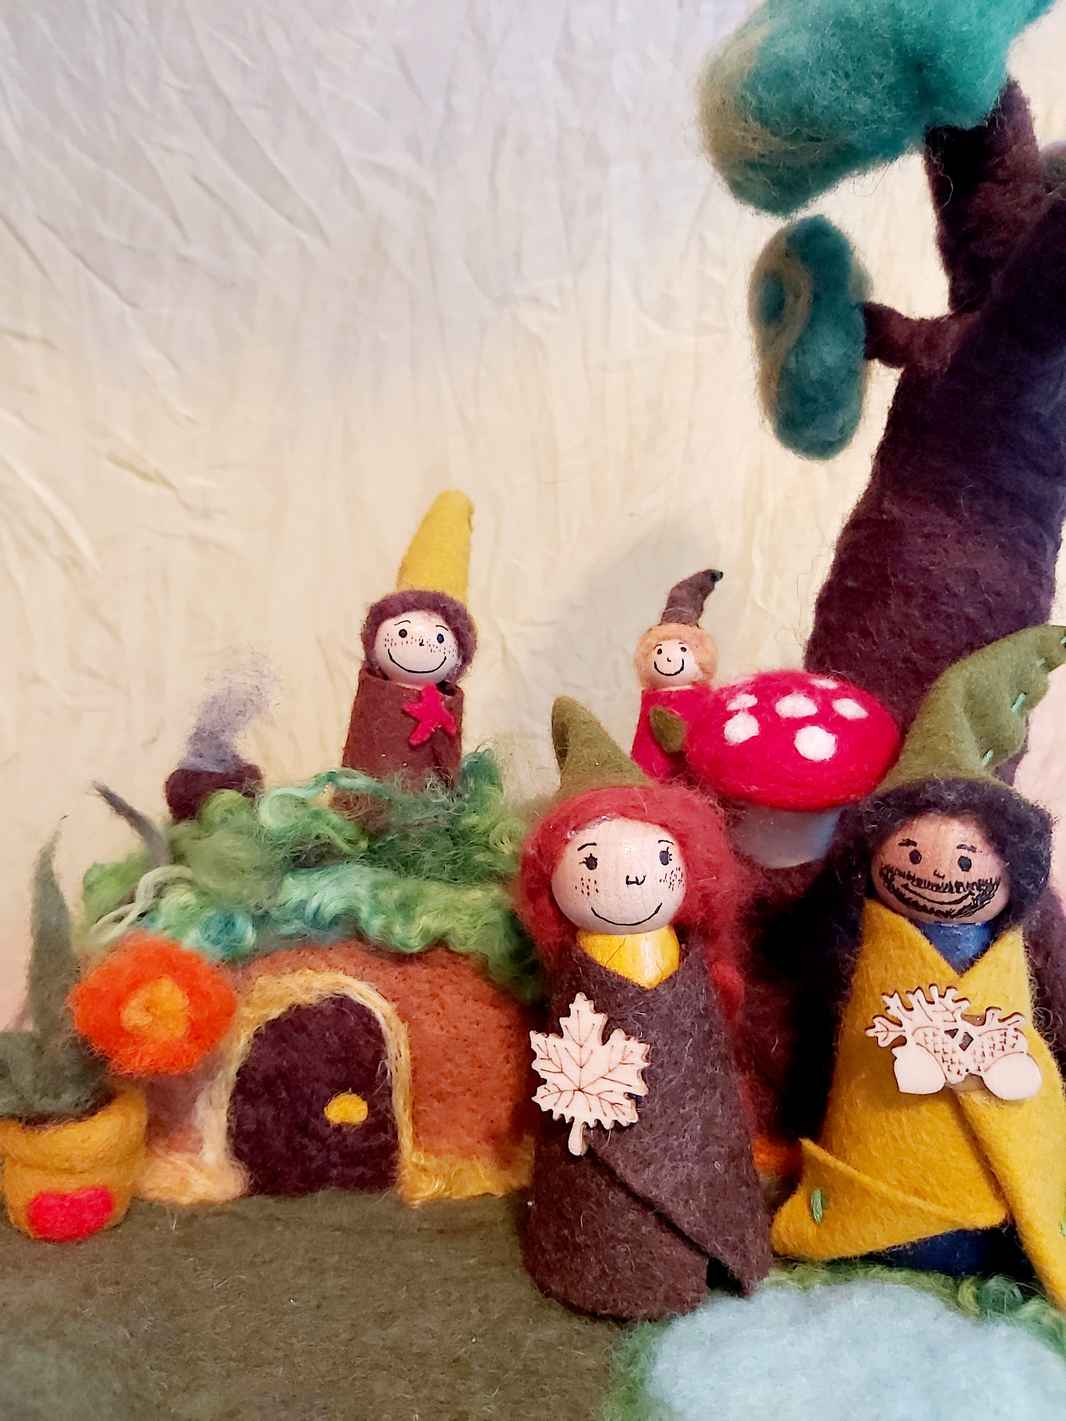 Gnome home with tree and pegdolls